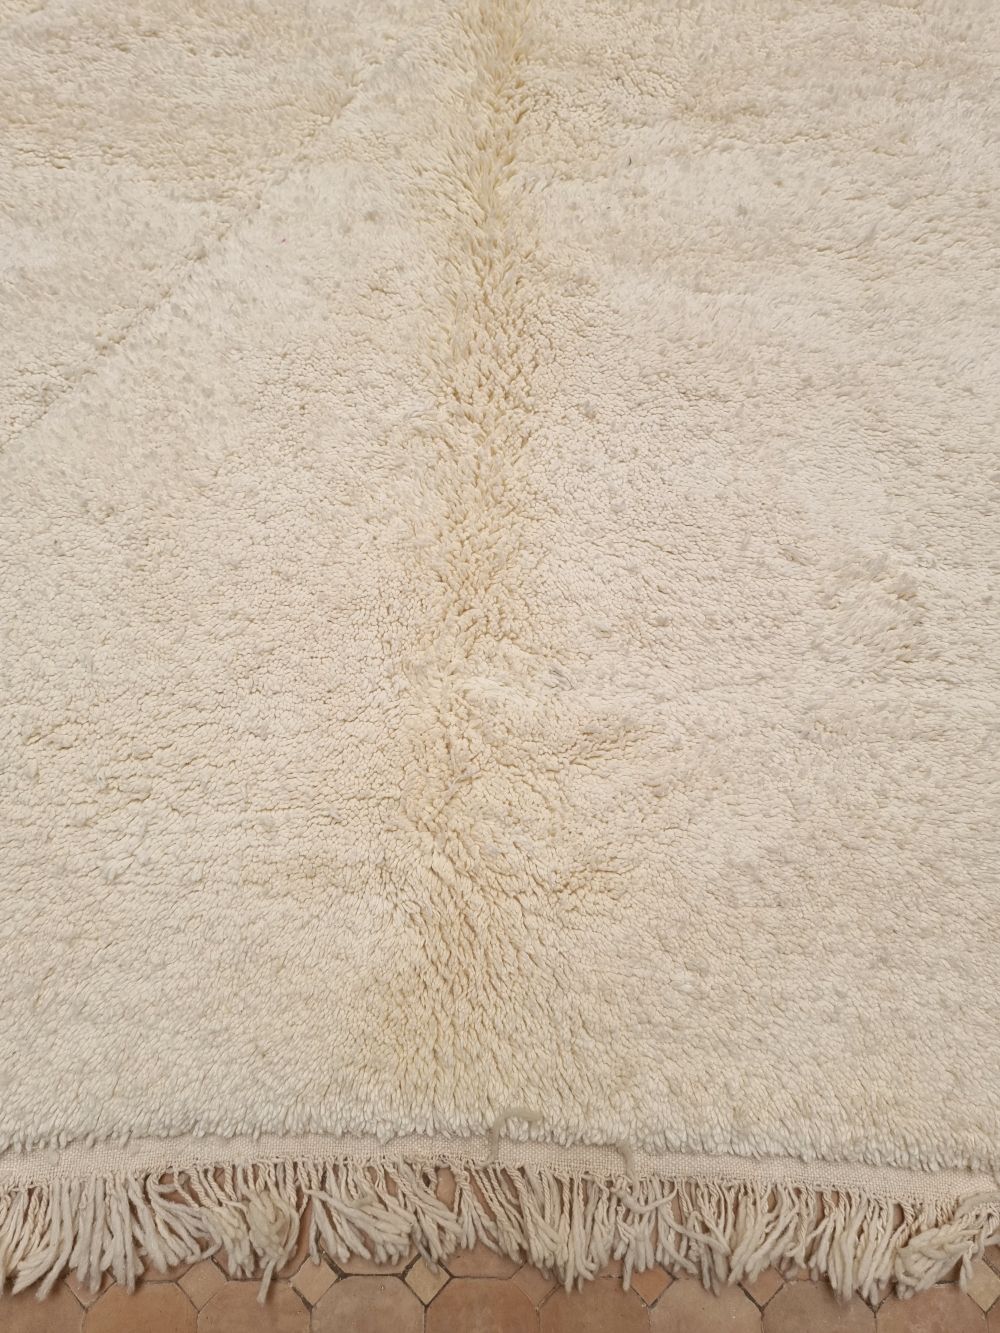 Marokkolainen matto Cream 265x160cm